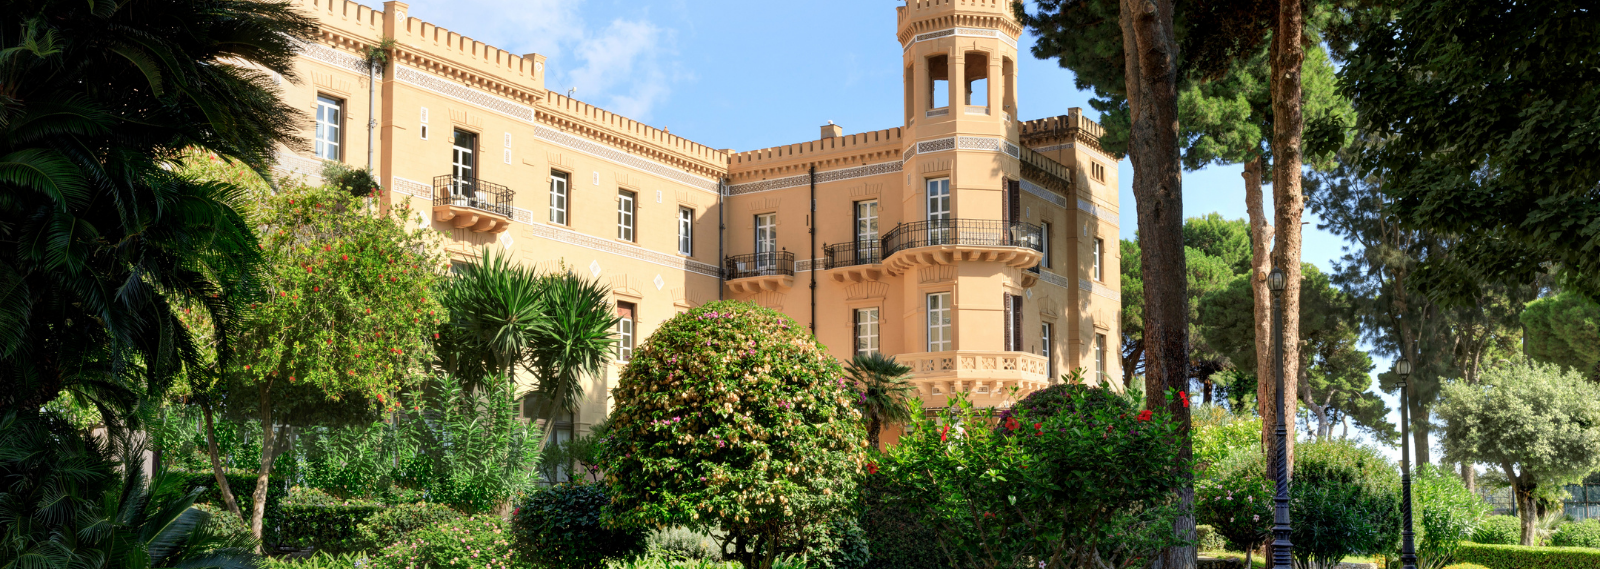 Villa Igiea fachada